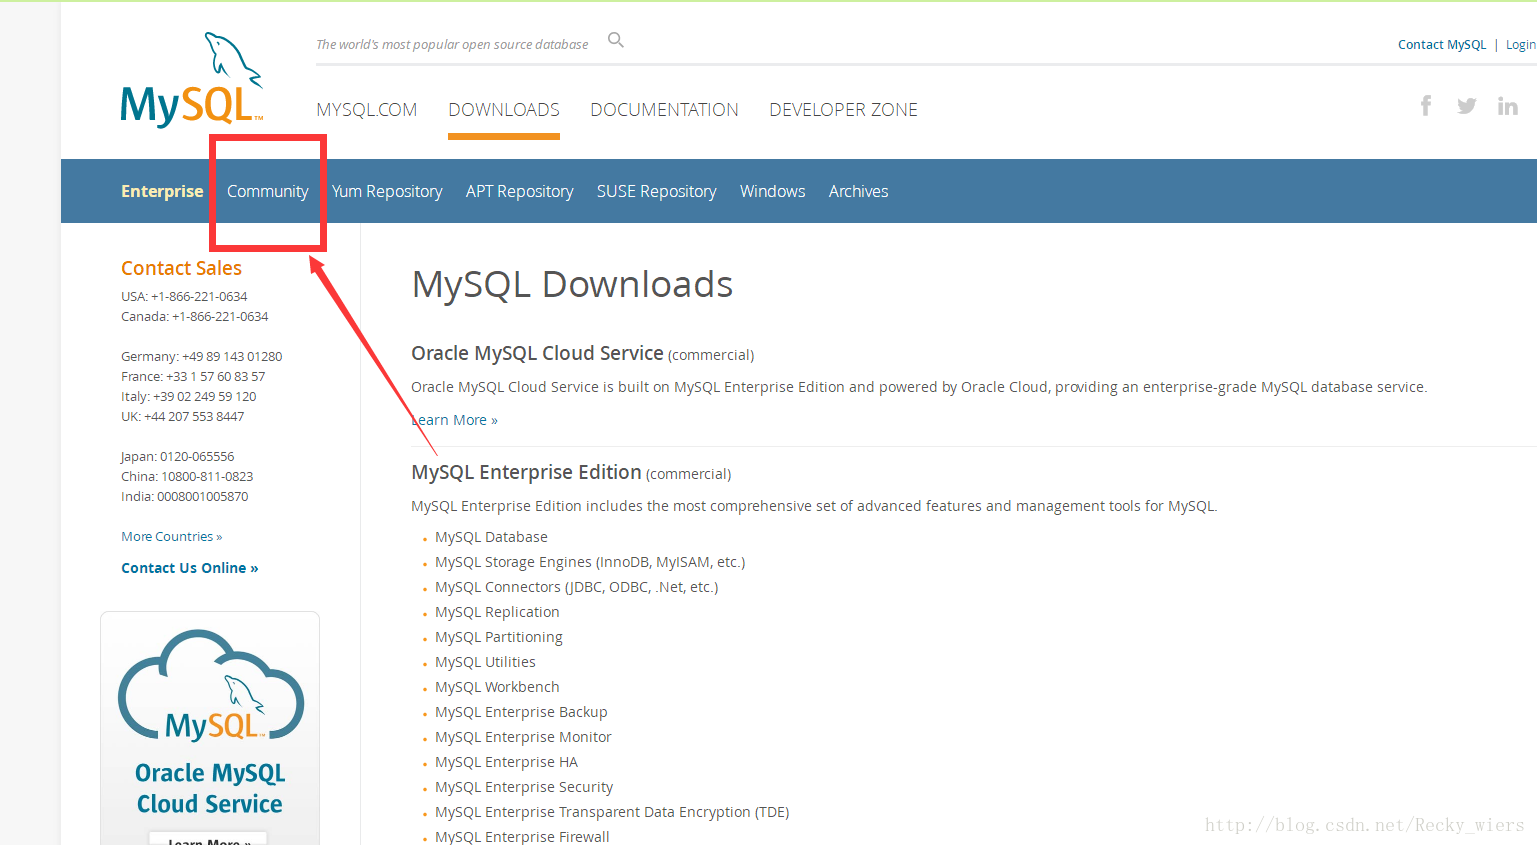 mysql 5.7.21 解压版安装配置方法图文教程